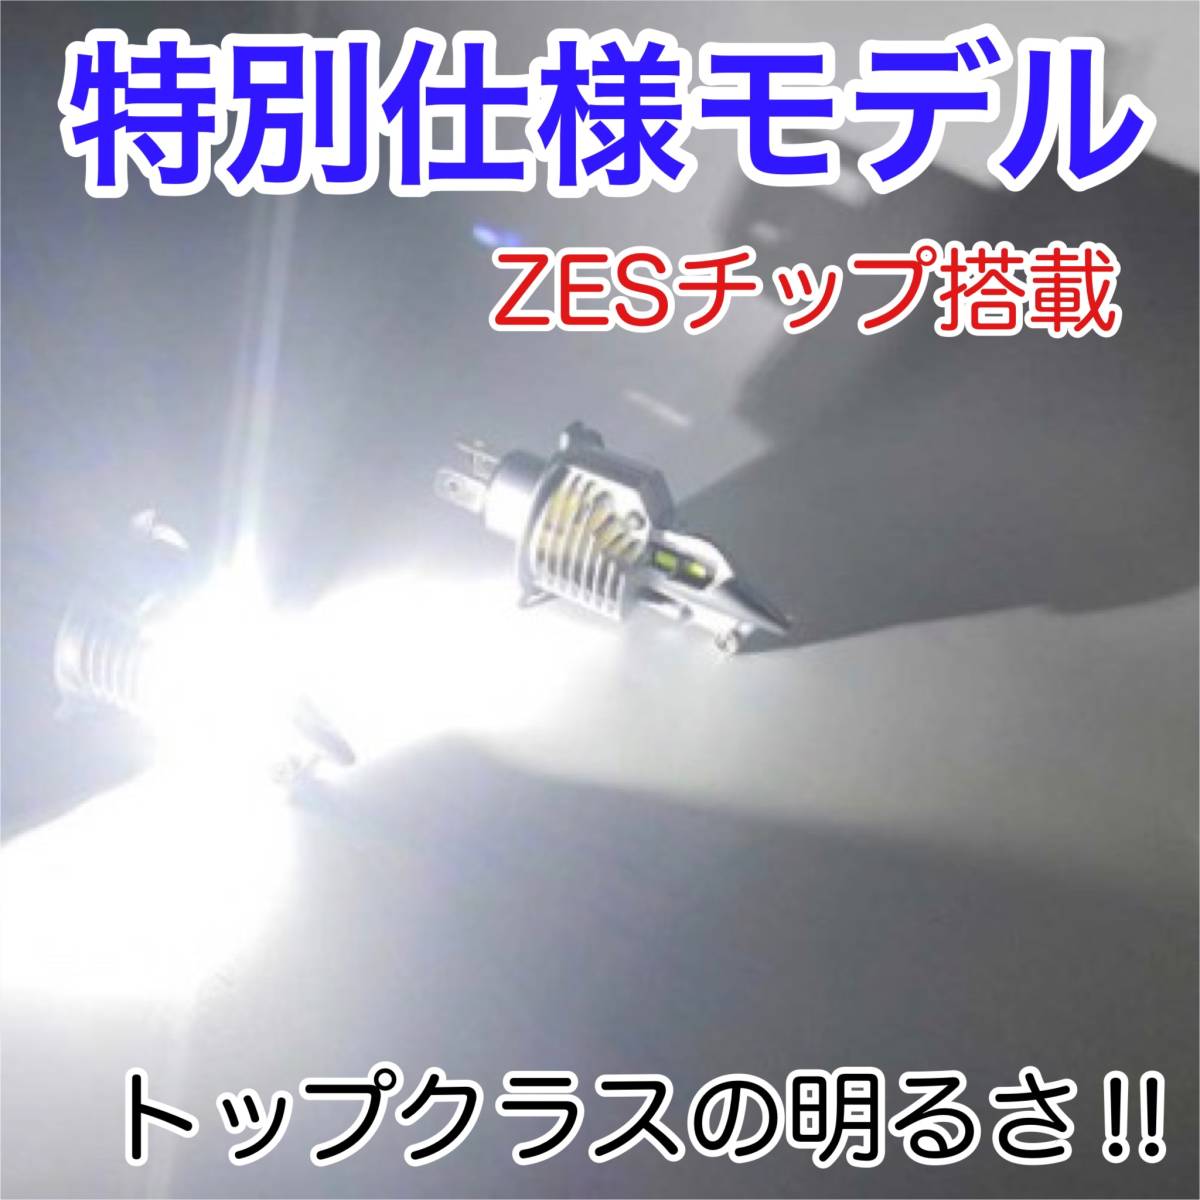 SUZUKI スズキ GSX-R250R GJ73A LED H4 LEDヘッドライト Hi/Lo バルブ バイク用 1灯 ホワイト 交換用